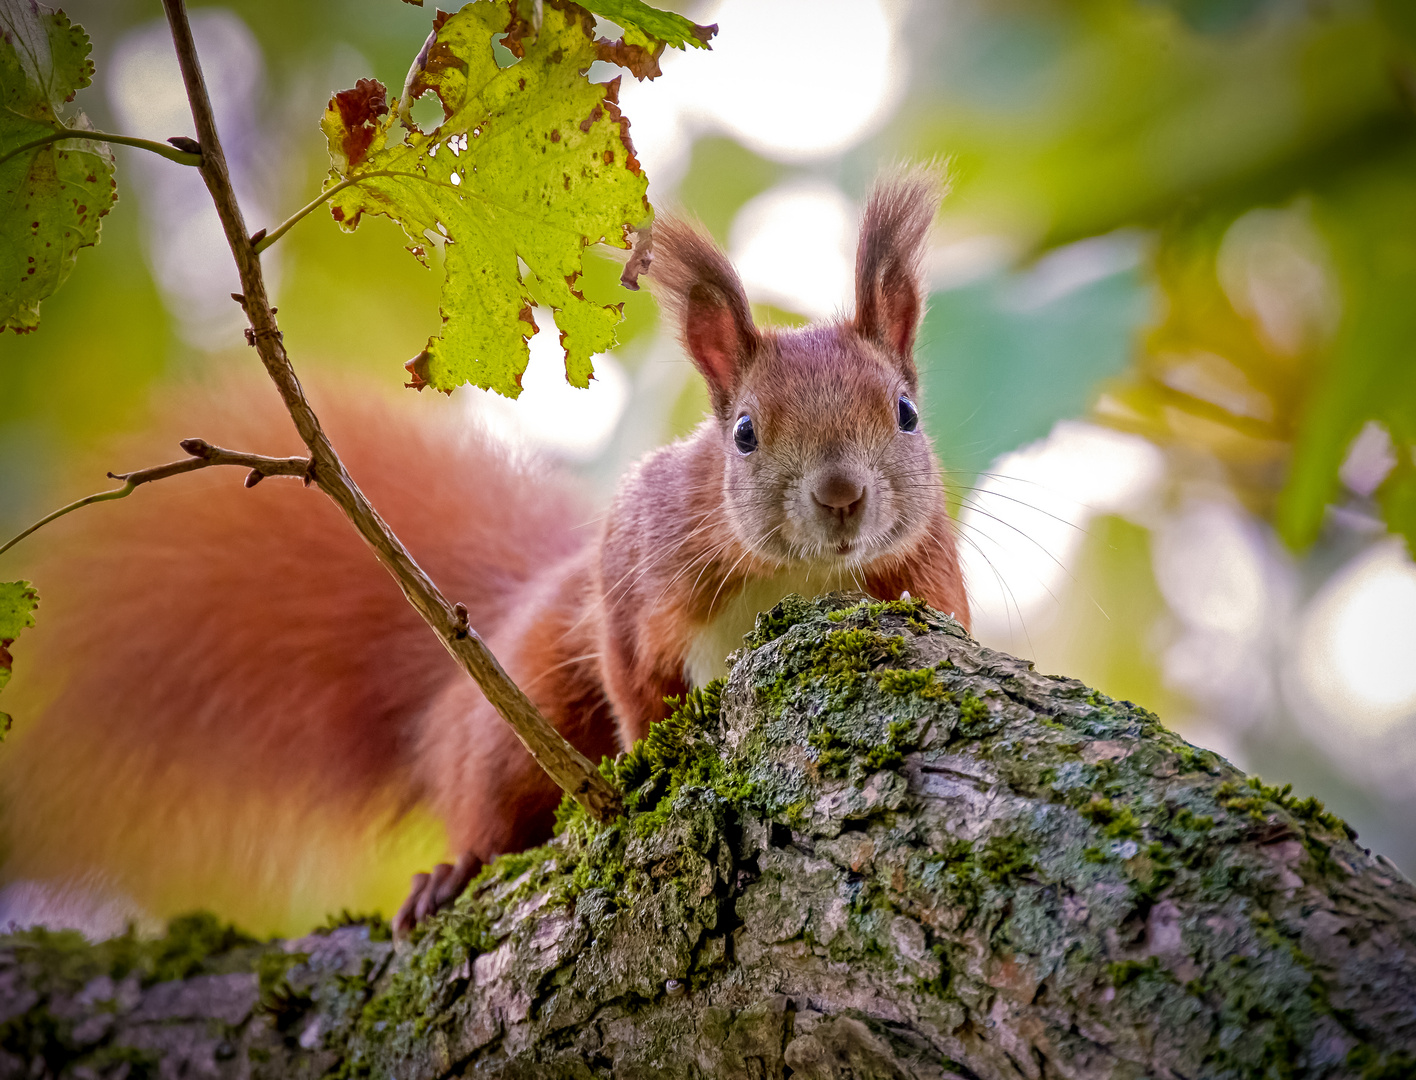 Herbsthörnchen